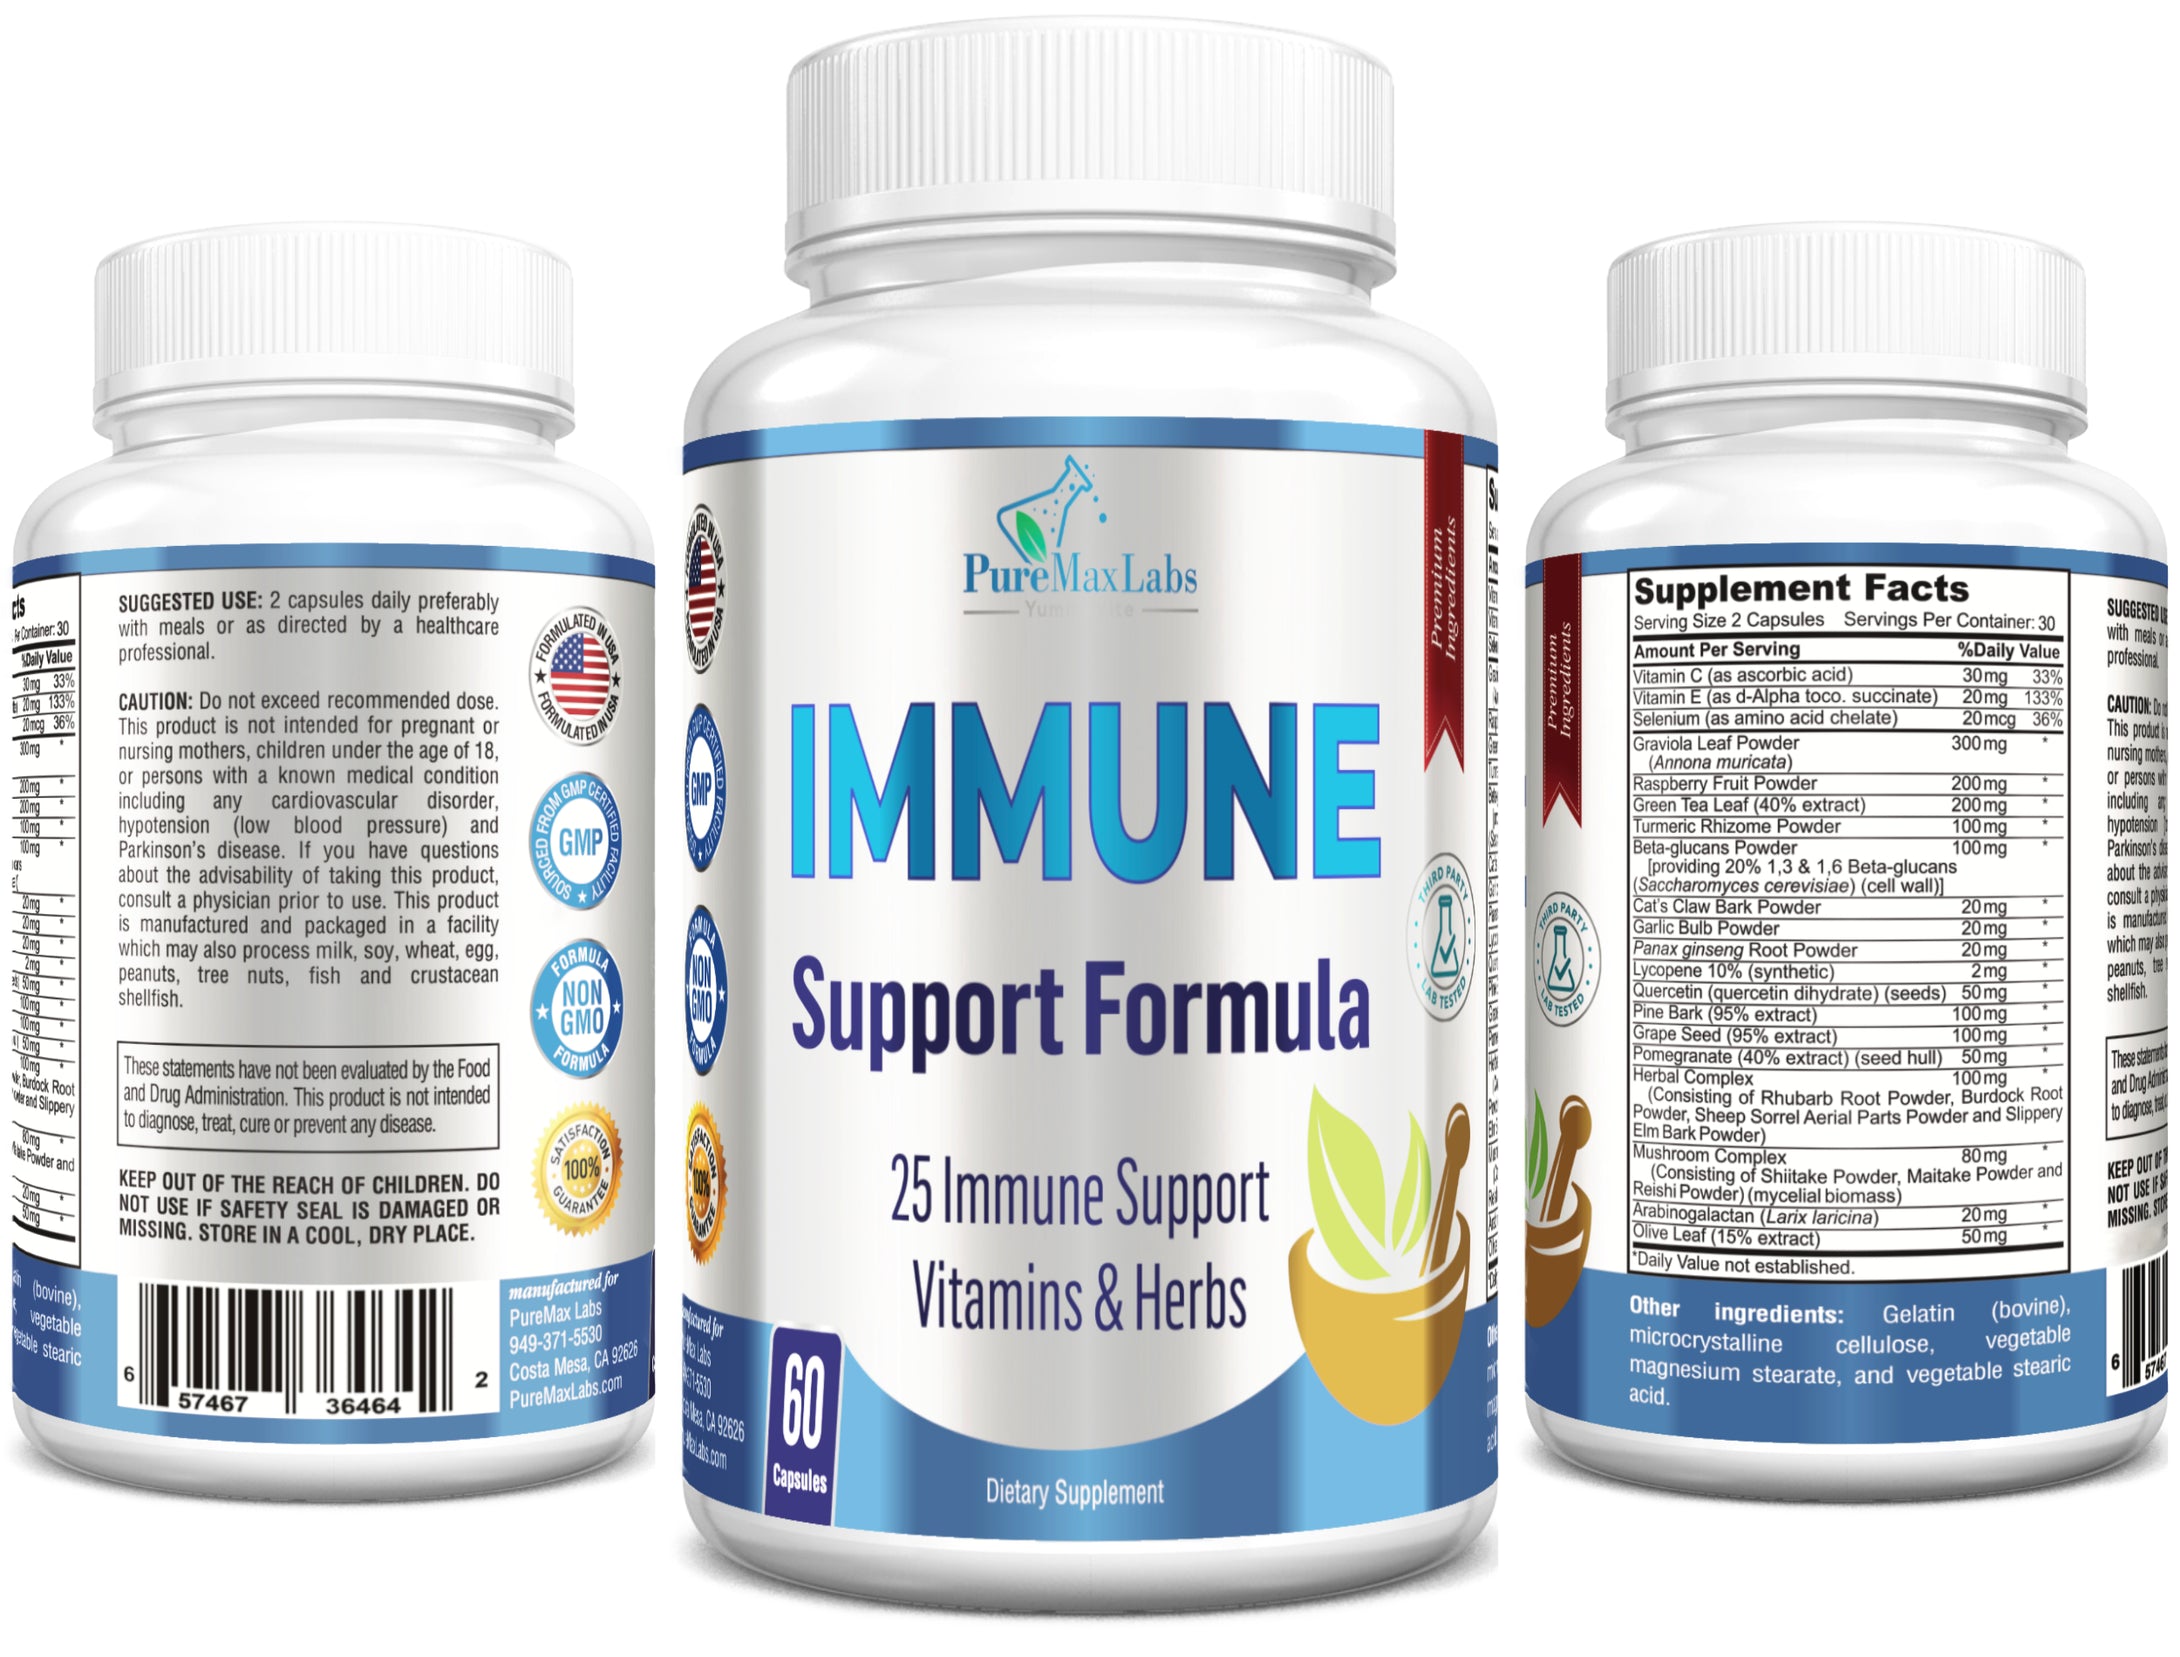 Immune Support Formula - 25 Immune Support Vitamins & Herbs - 60 Capsules